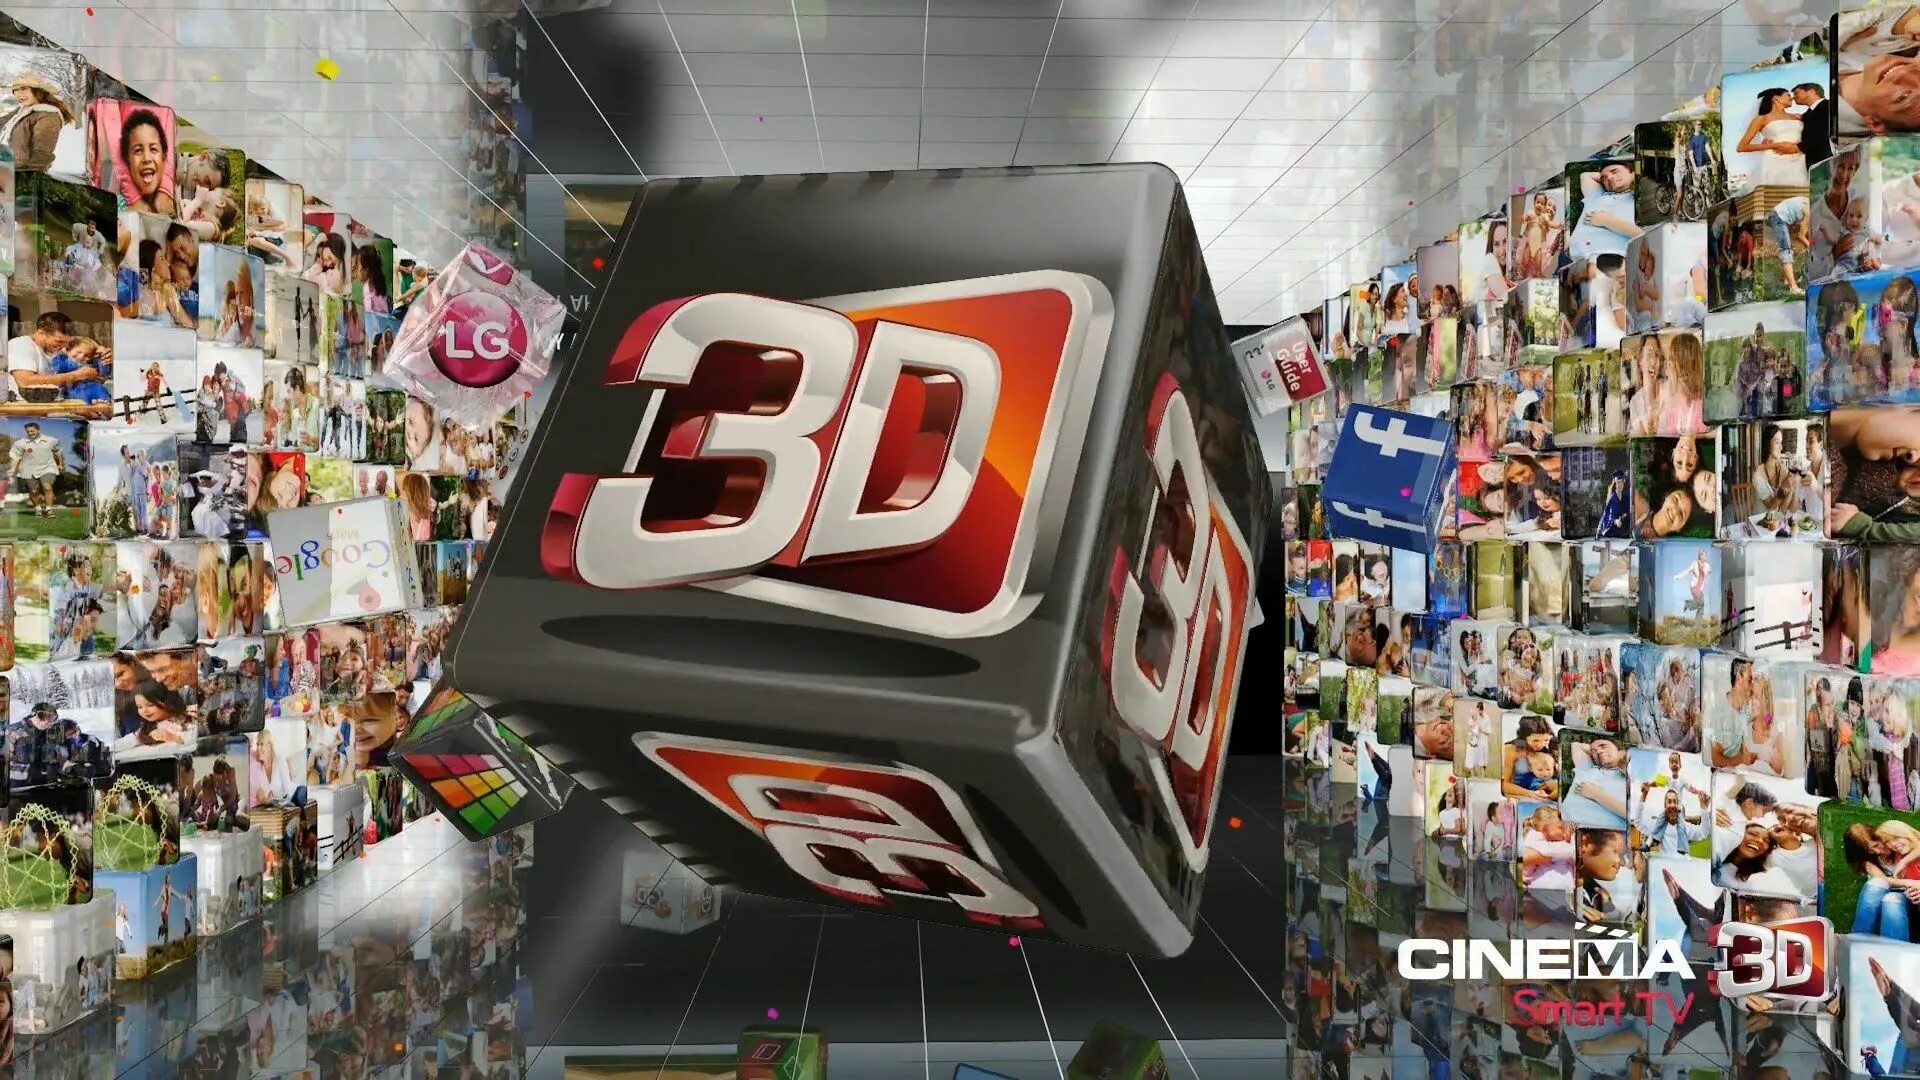 3d demo. LG 3d. LG 3d Demo. LG Cinema 3d.